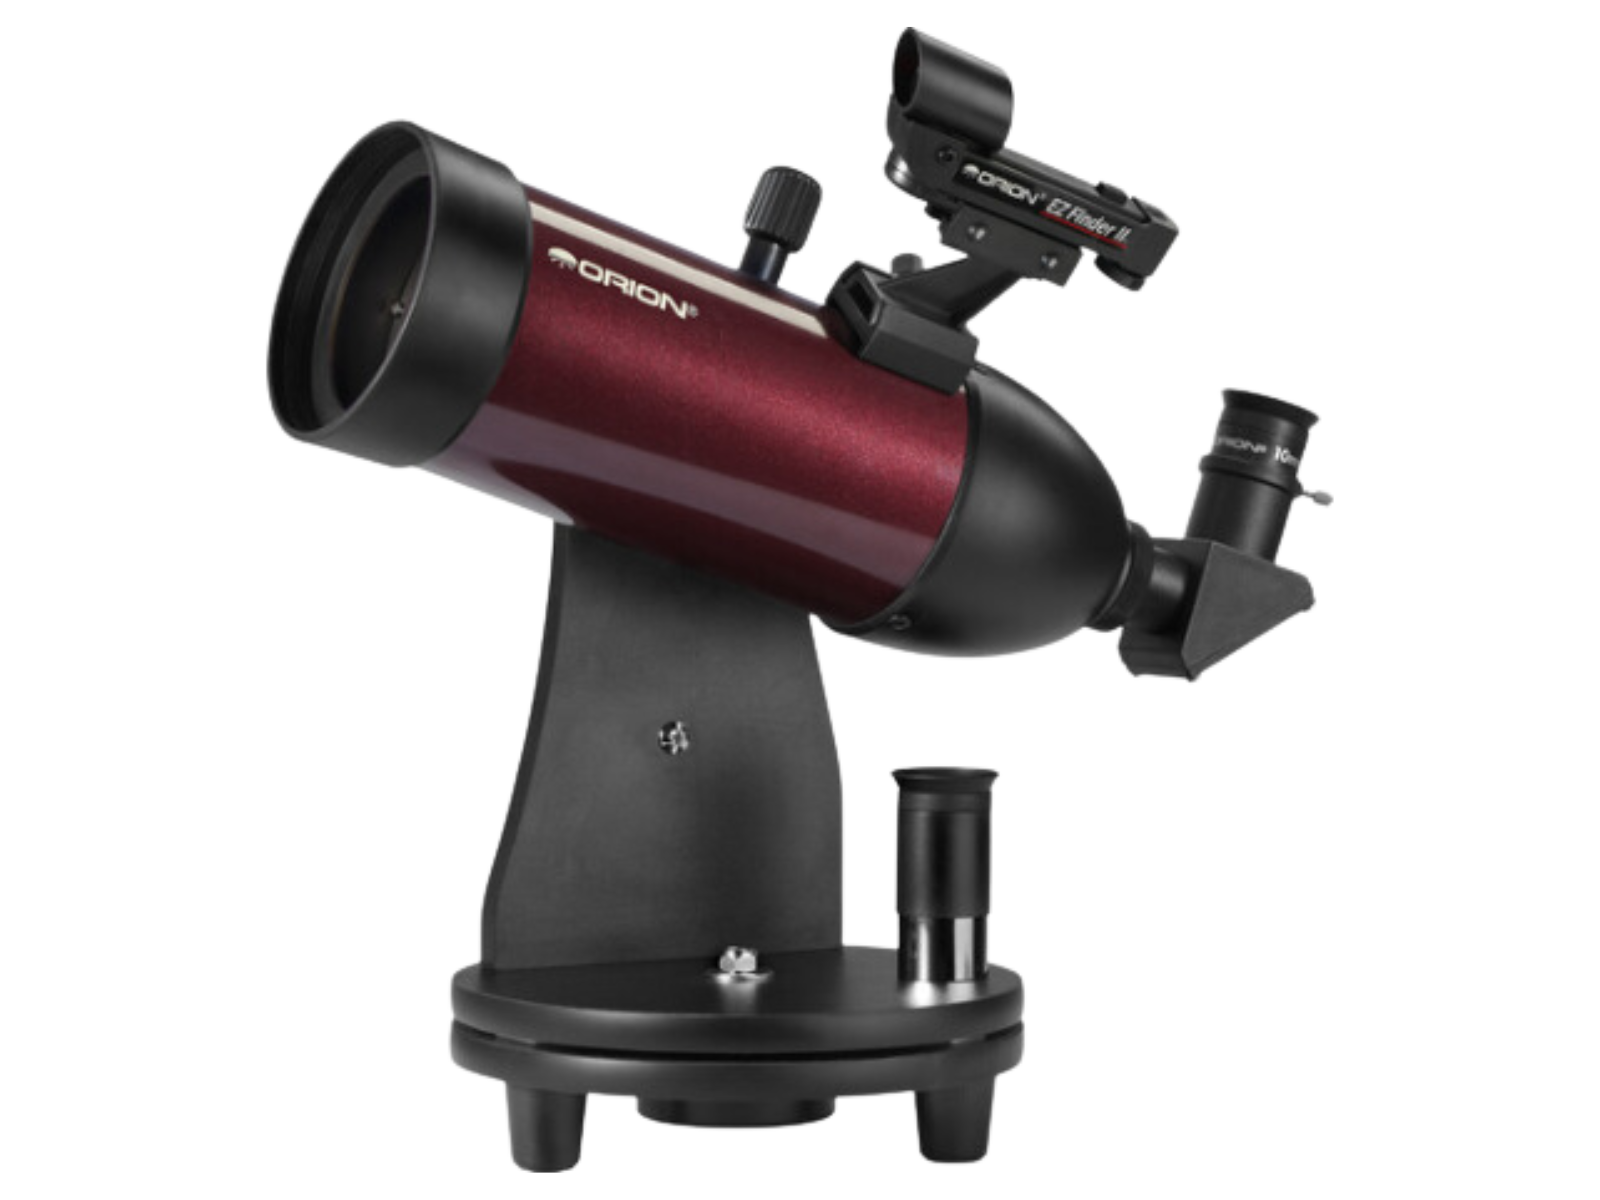 A shorter, squat canon-shaped telescope.